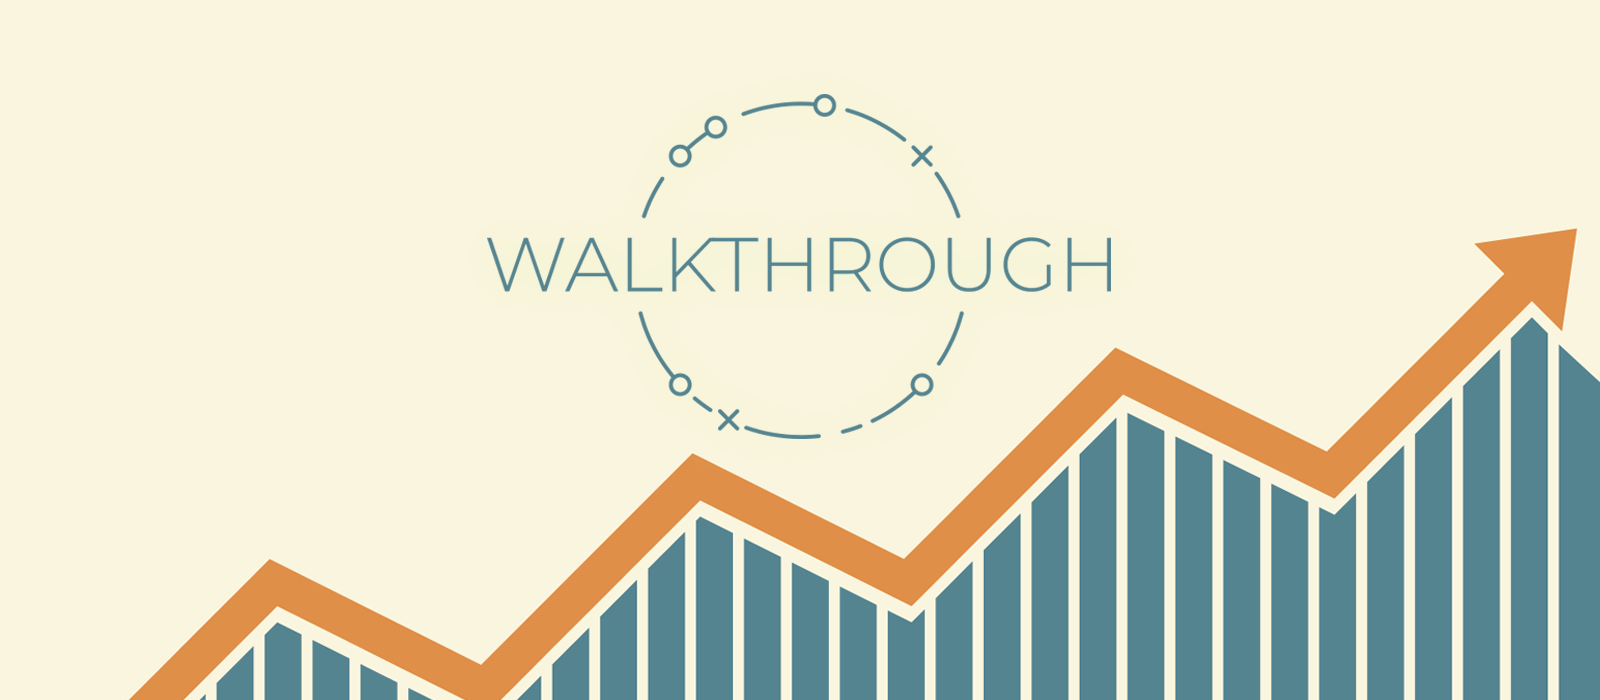 Walkthrough-Google-trends-blog-image